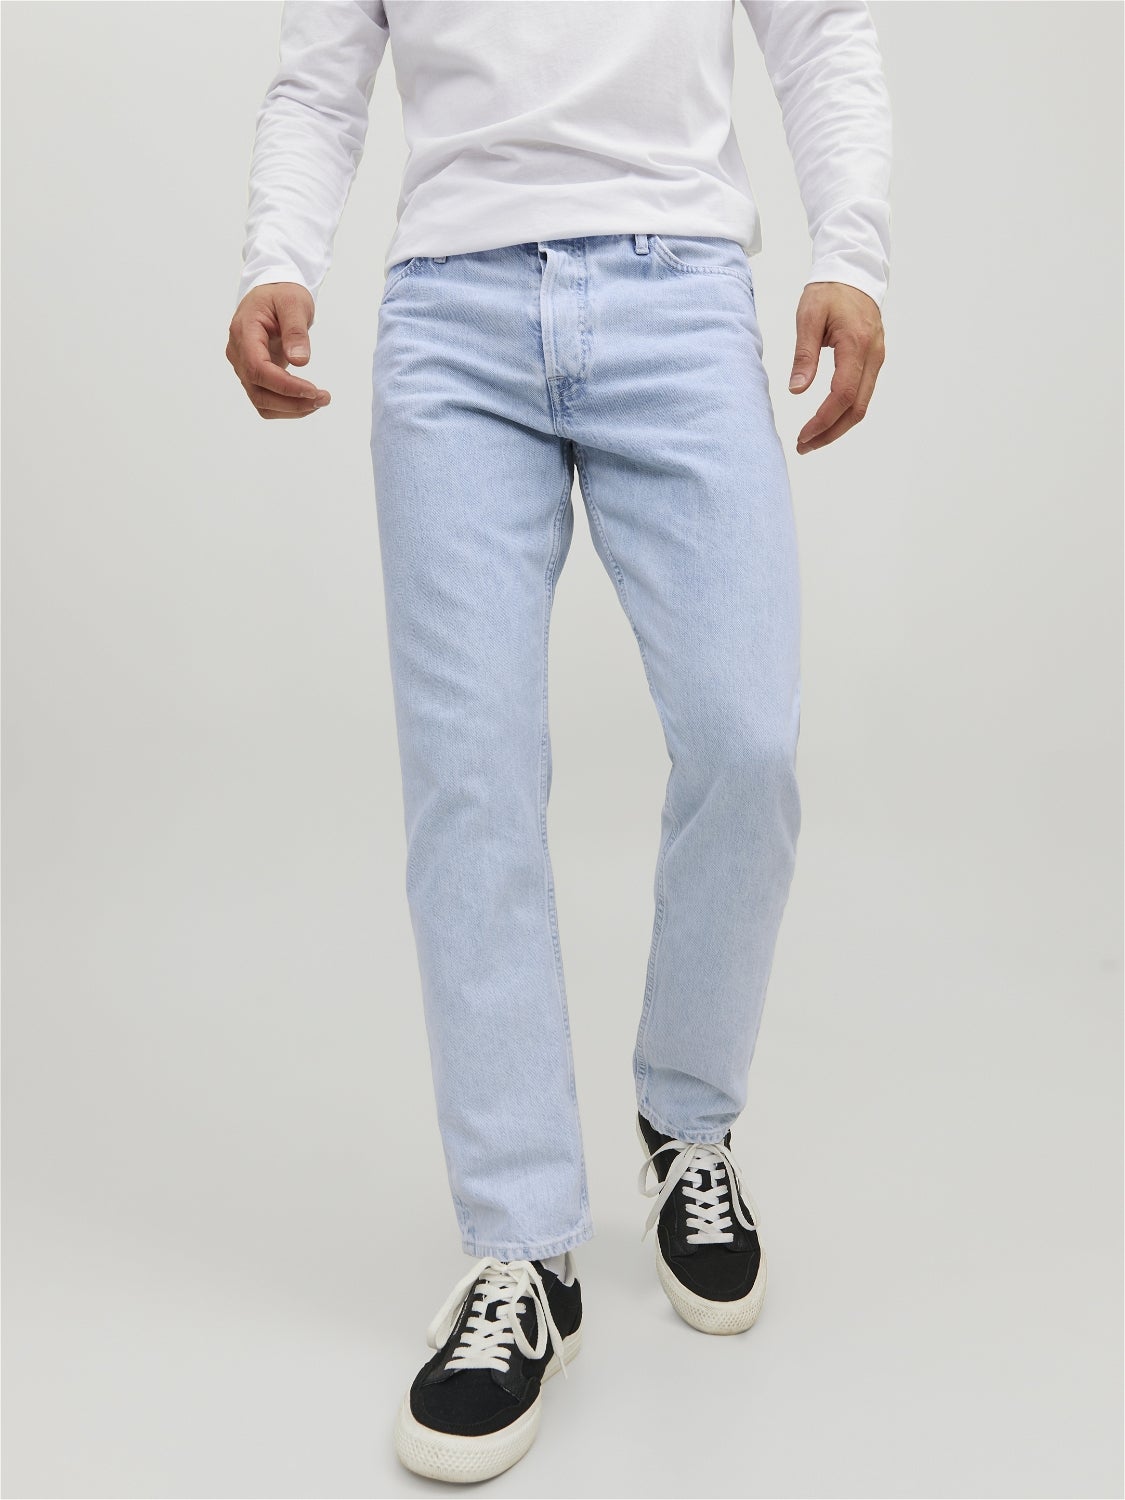 discount 57% Jack & Jones shorts jeans MEN FASHION Jeans Strech Black XXL 